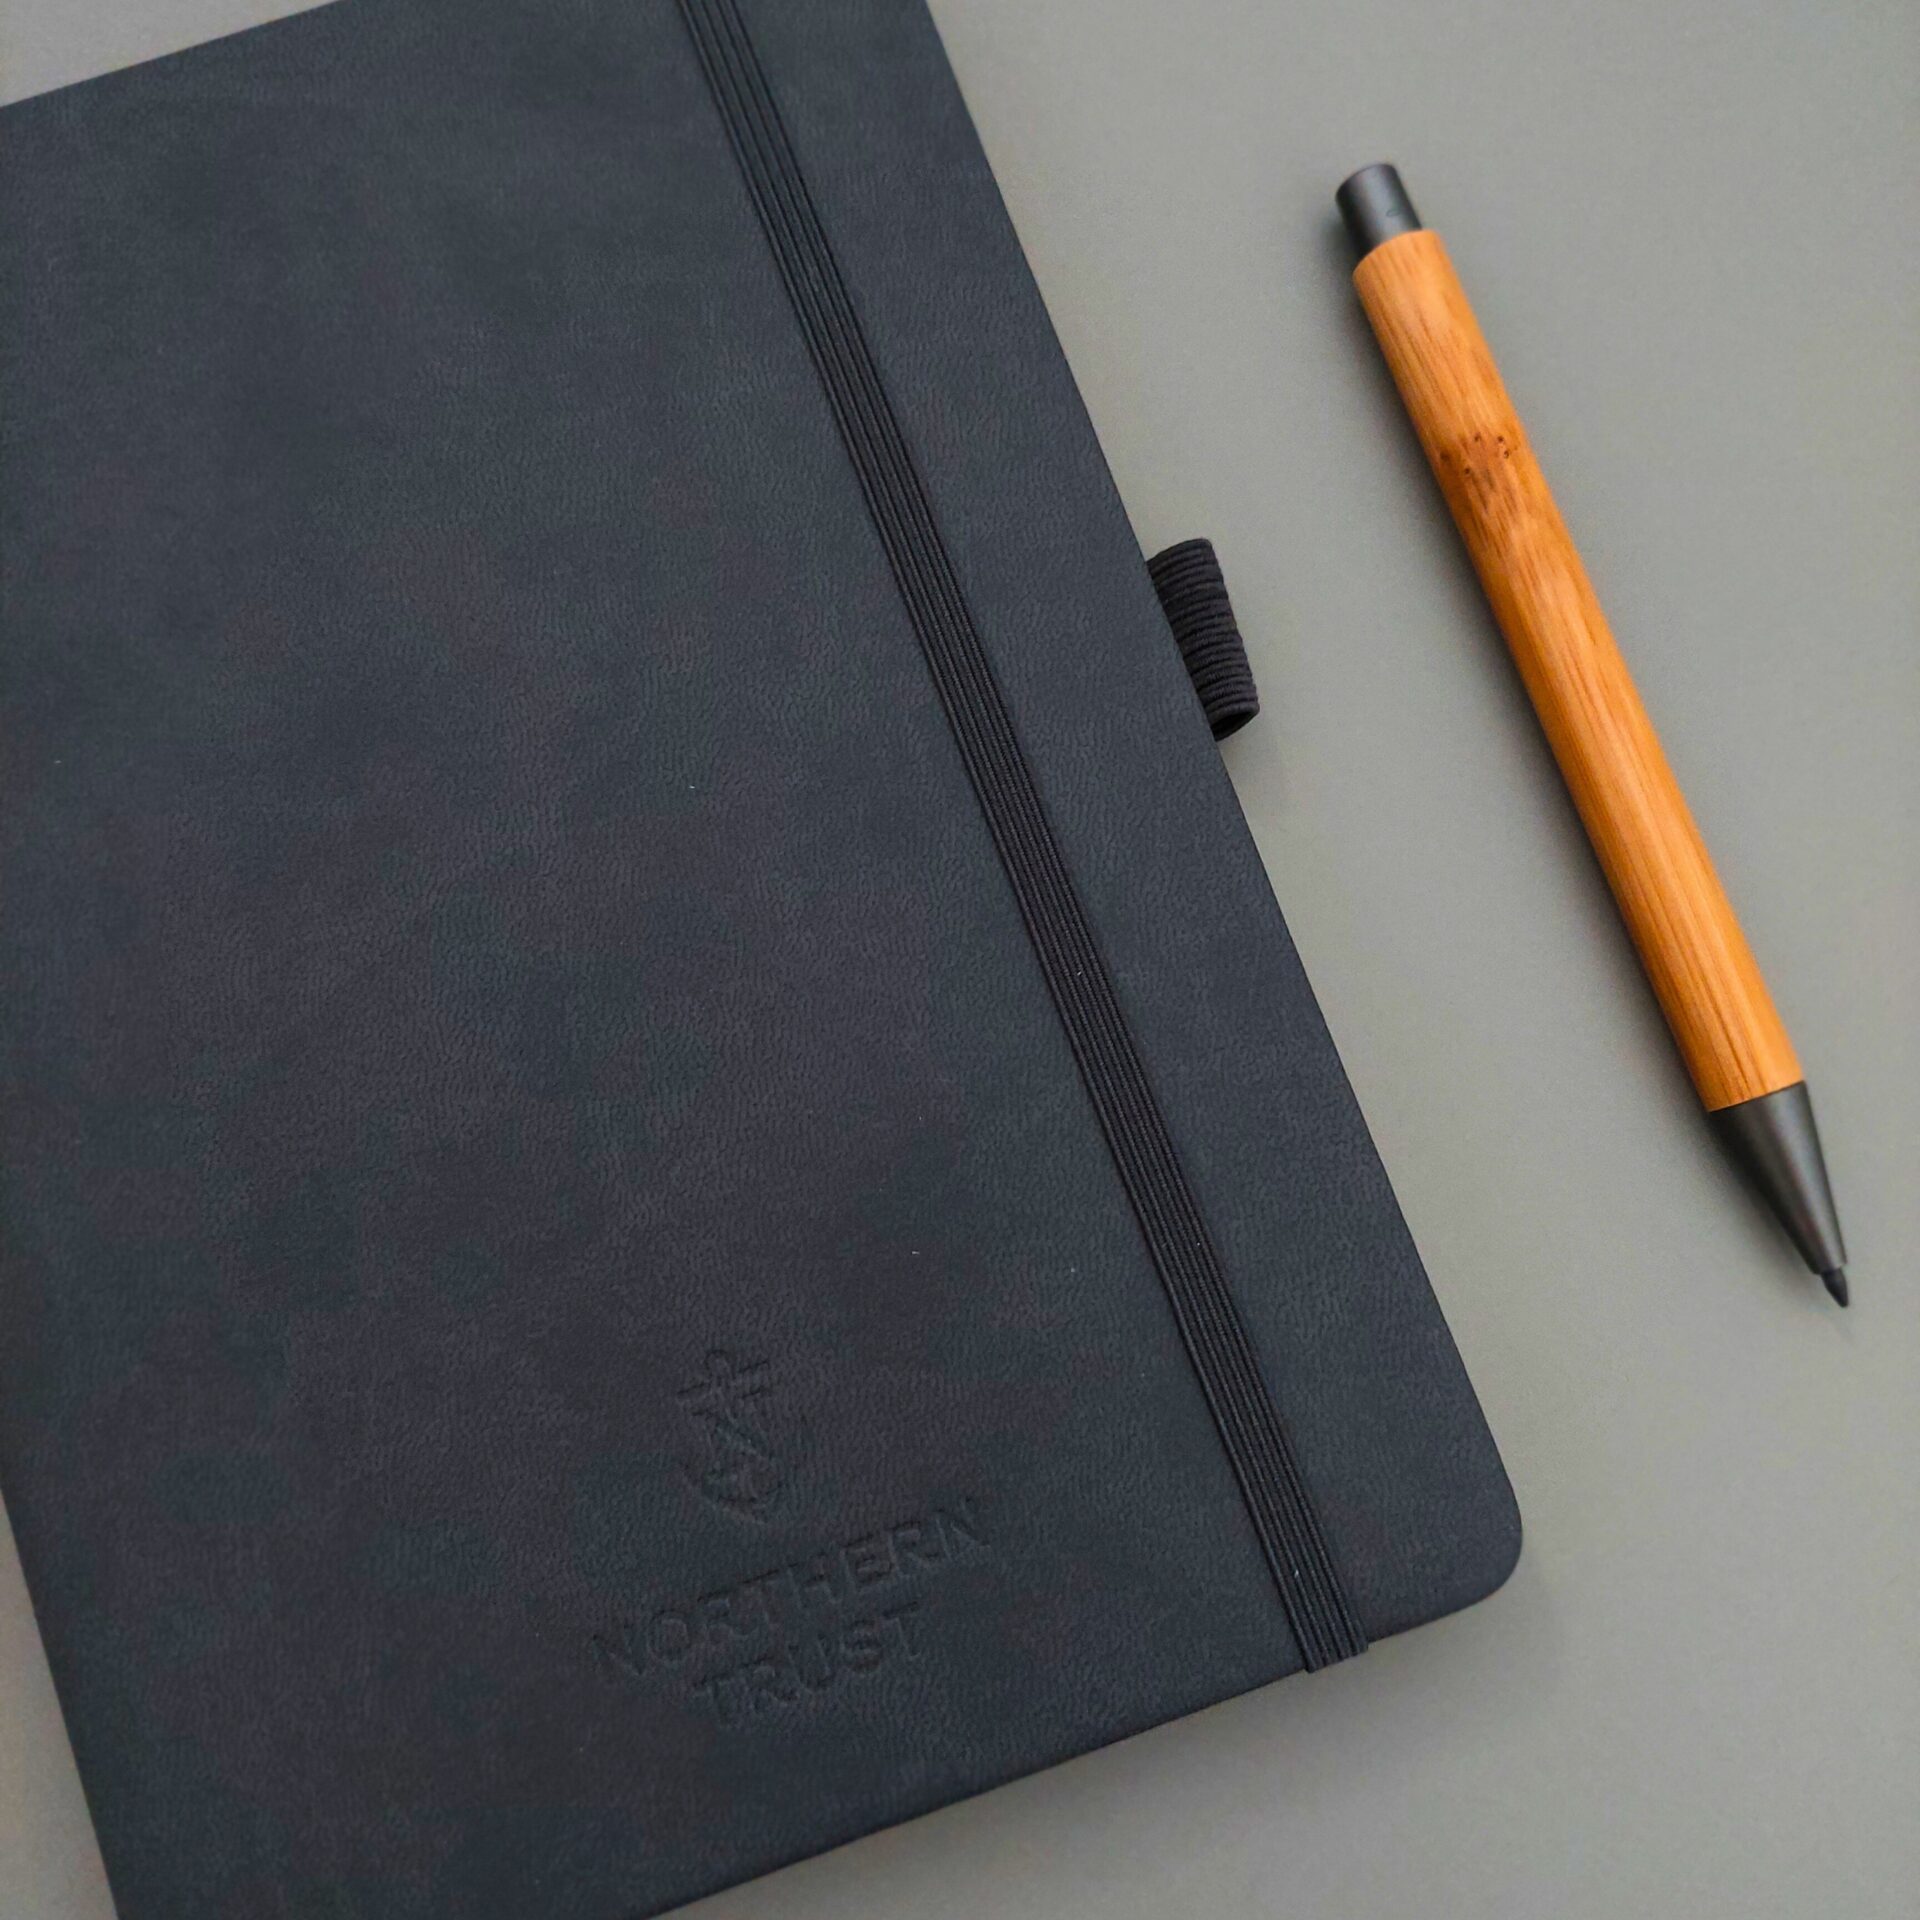 customised notebook corporate gift singapore Imero grey with sustainable bamboo pen